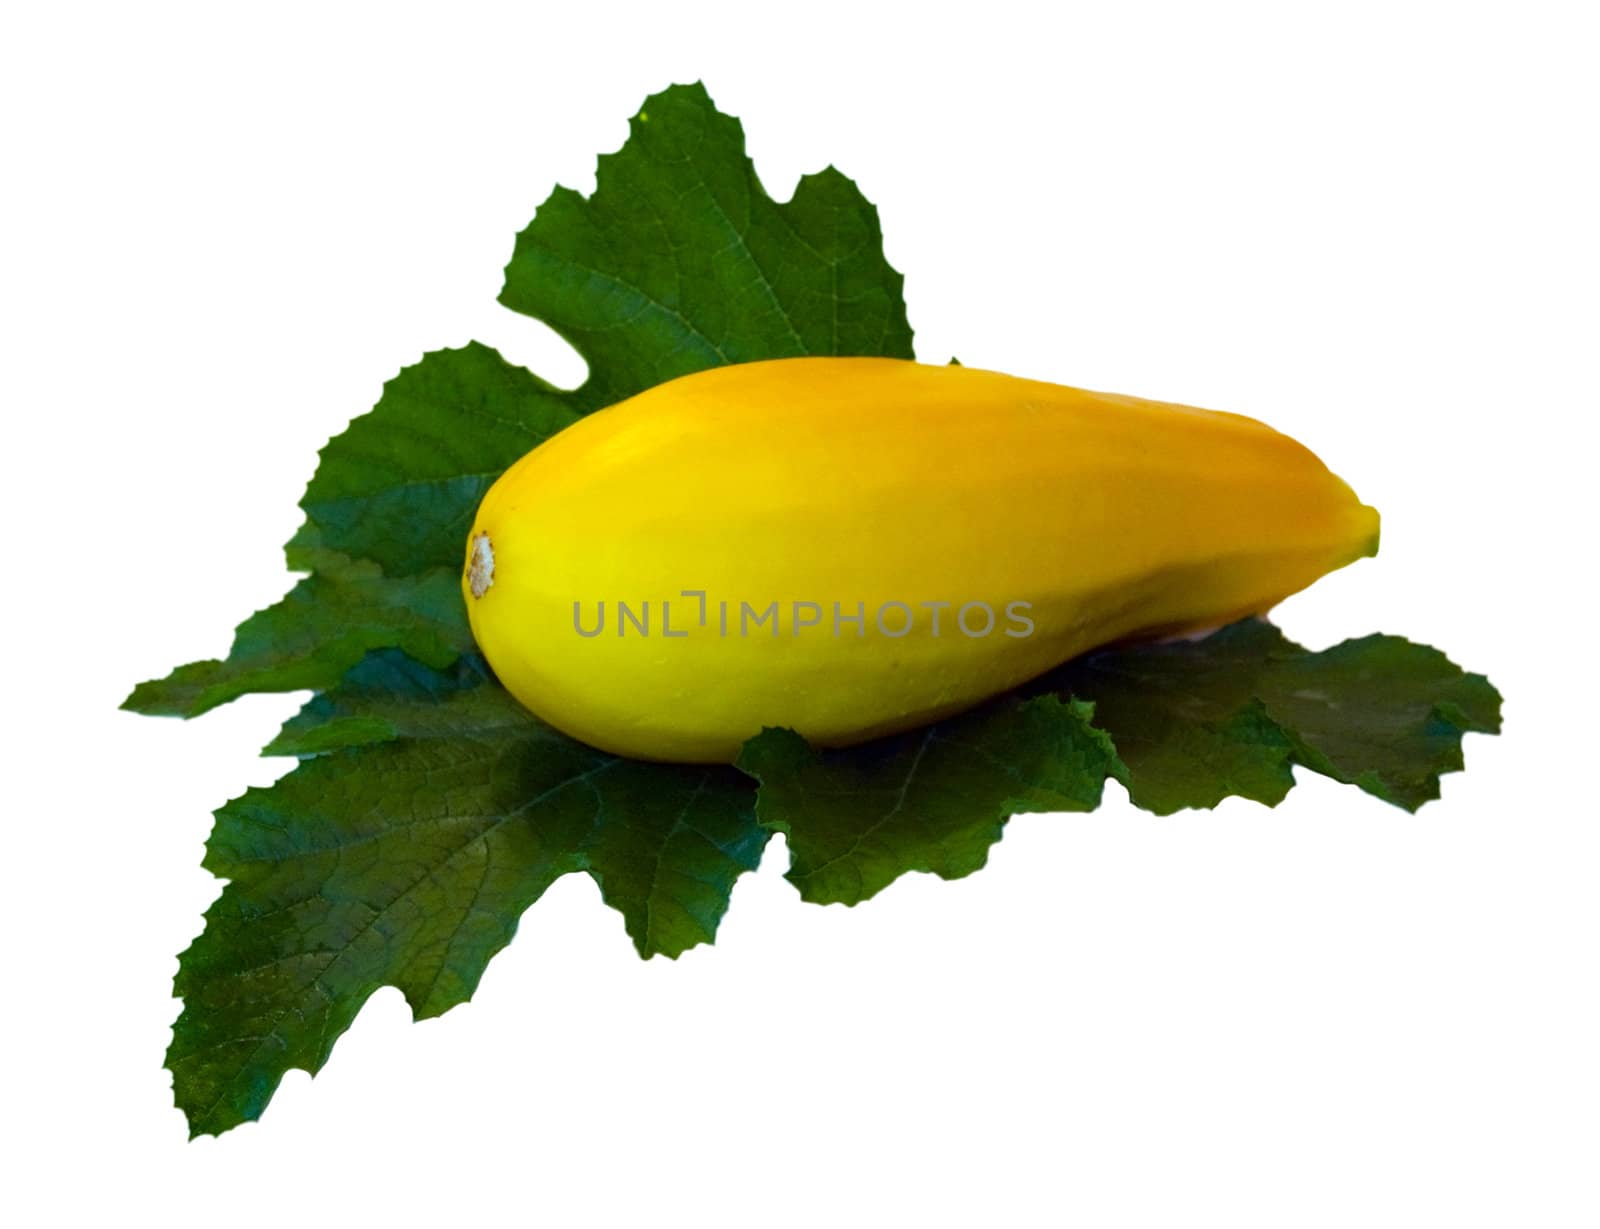 yellow vegetable marrow by gooclia